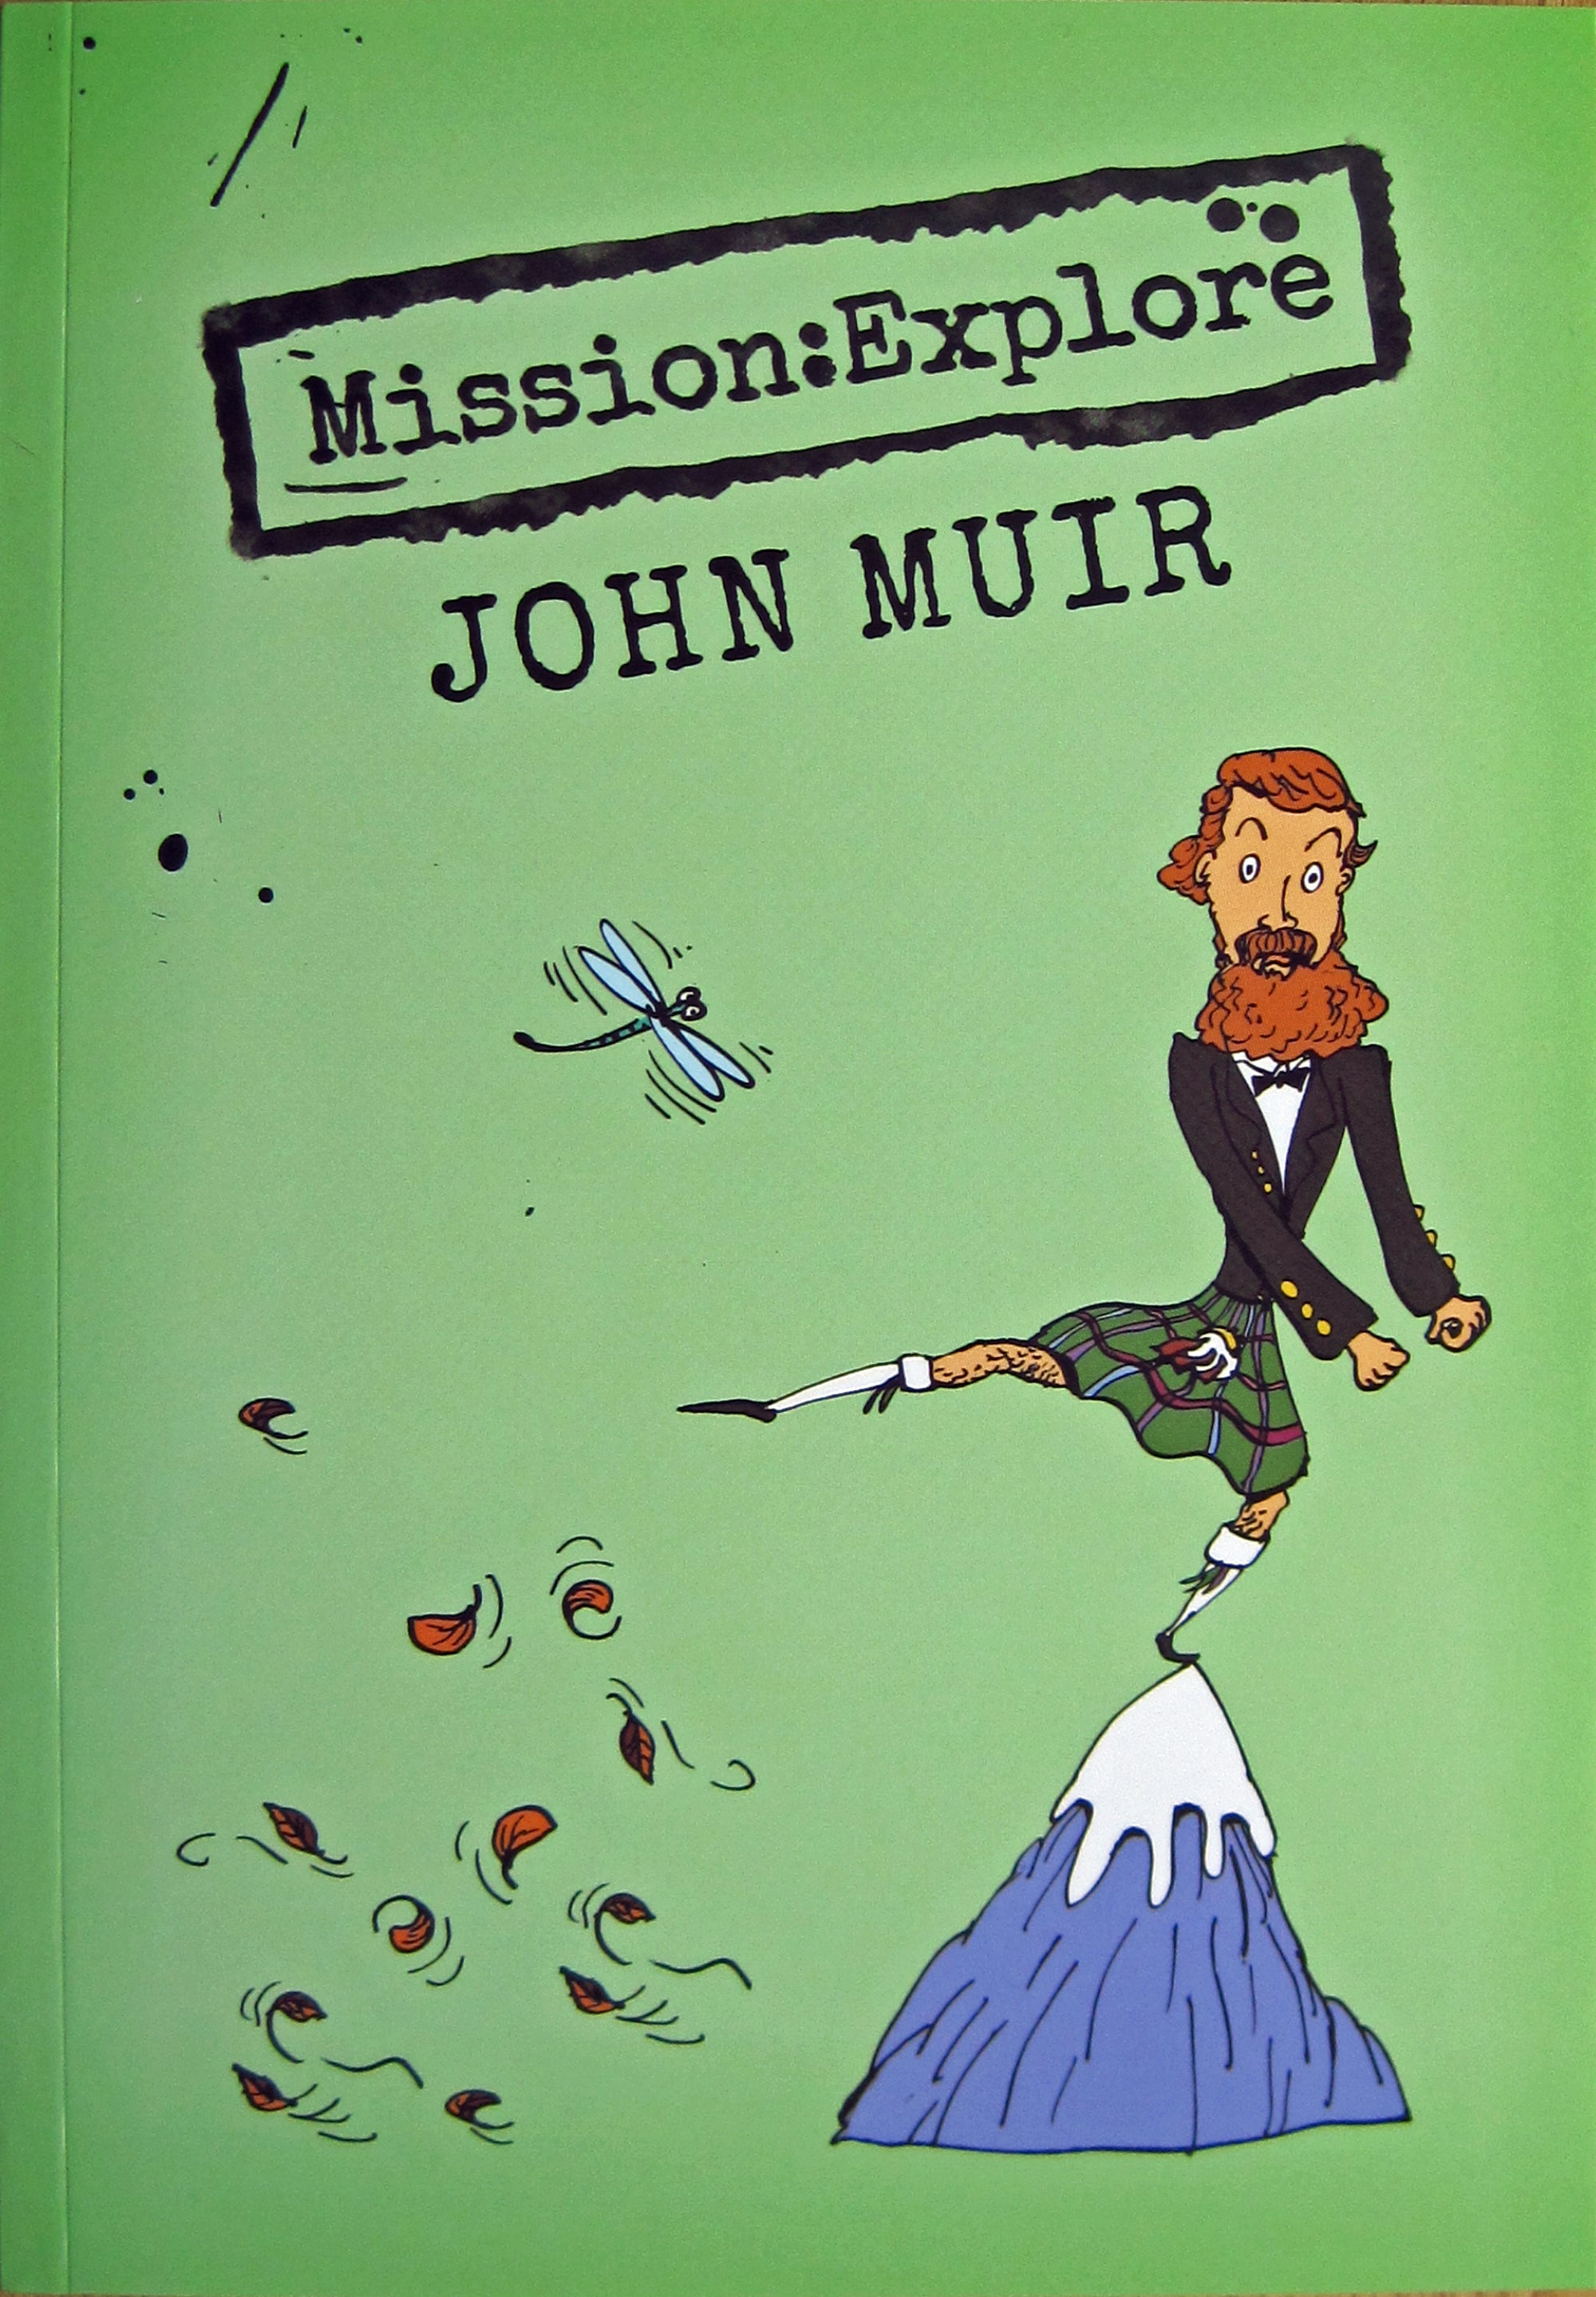 Mission: Explore John Muir